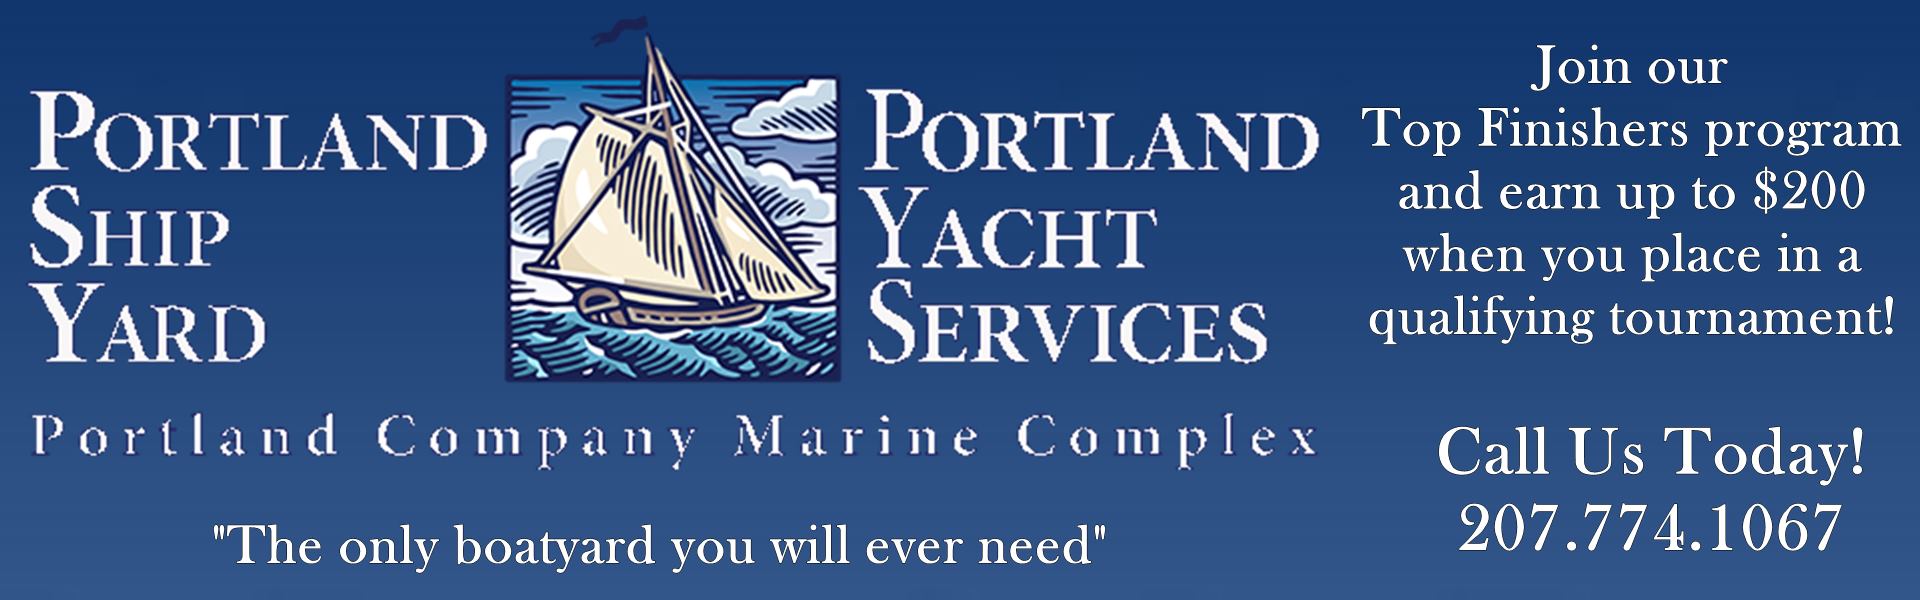 Portland Yacht Services, Portland Ship Yard